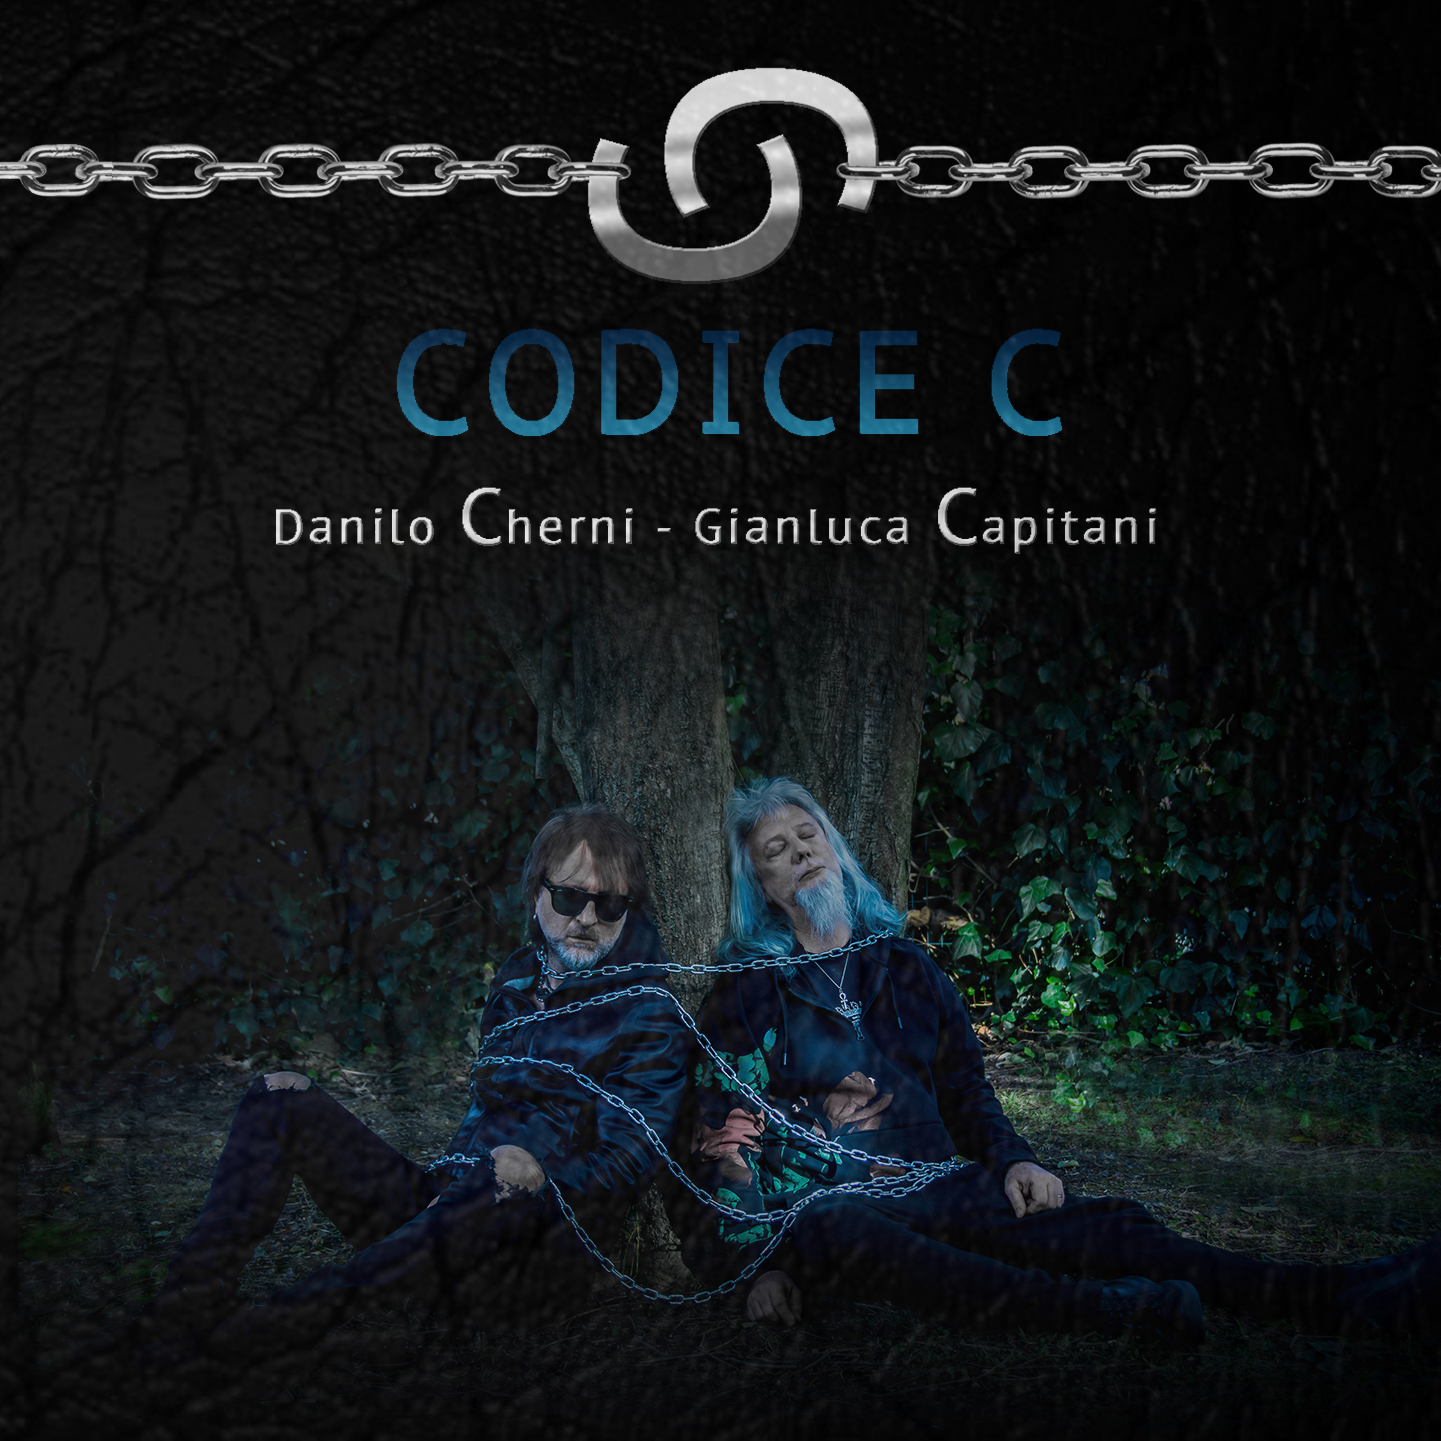 CODICE C - "Codice C" Cd Super JC